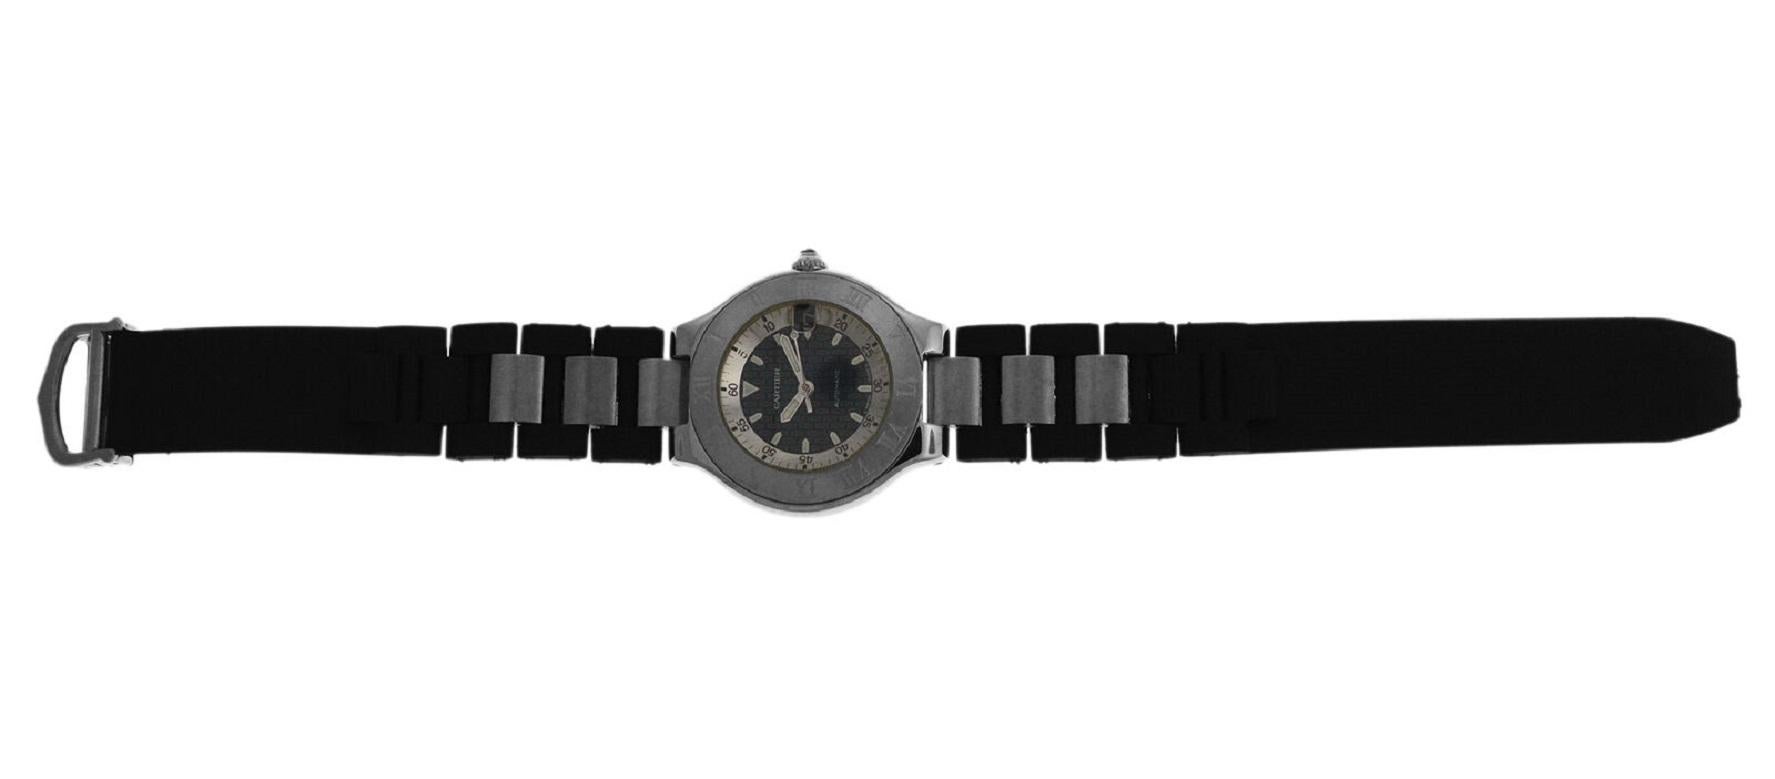 Men's Cartier 2427 Autoscaph Steel Date Automatic Watch For Sale 3